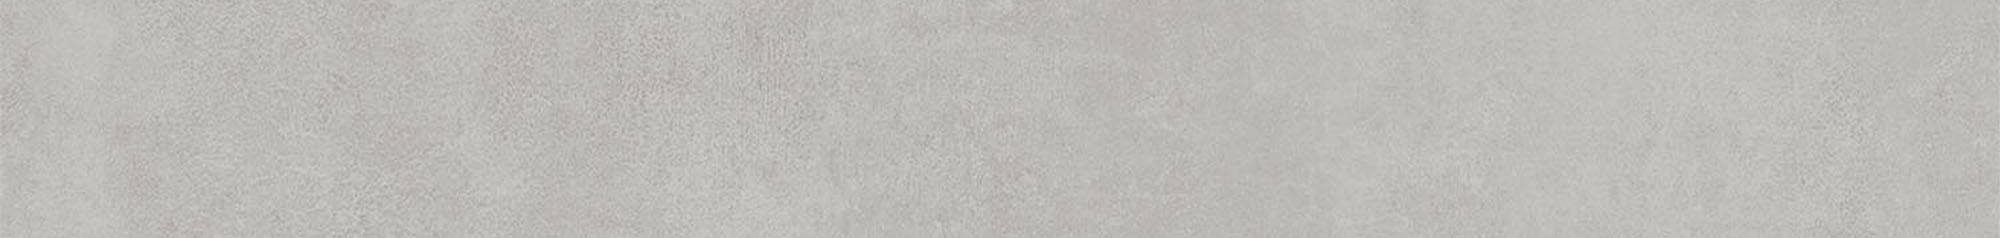 DD841190R/8BT Плинтус Про Догана серый светлый матовый обрезной 80x9,5x0,9 Kerama Marazzi